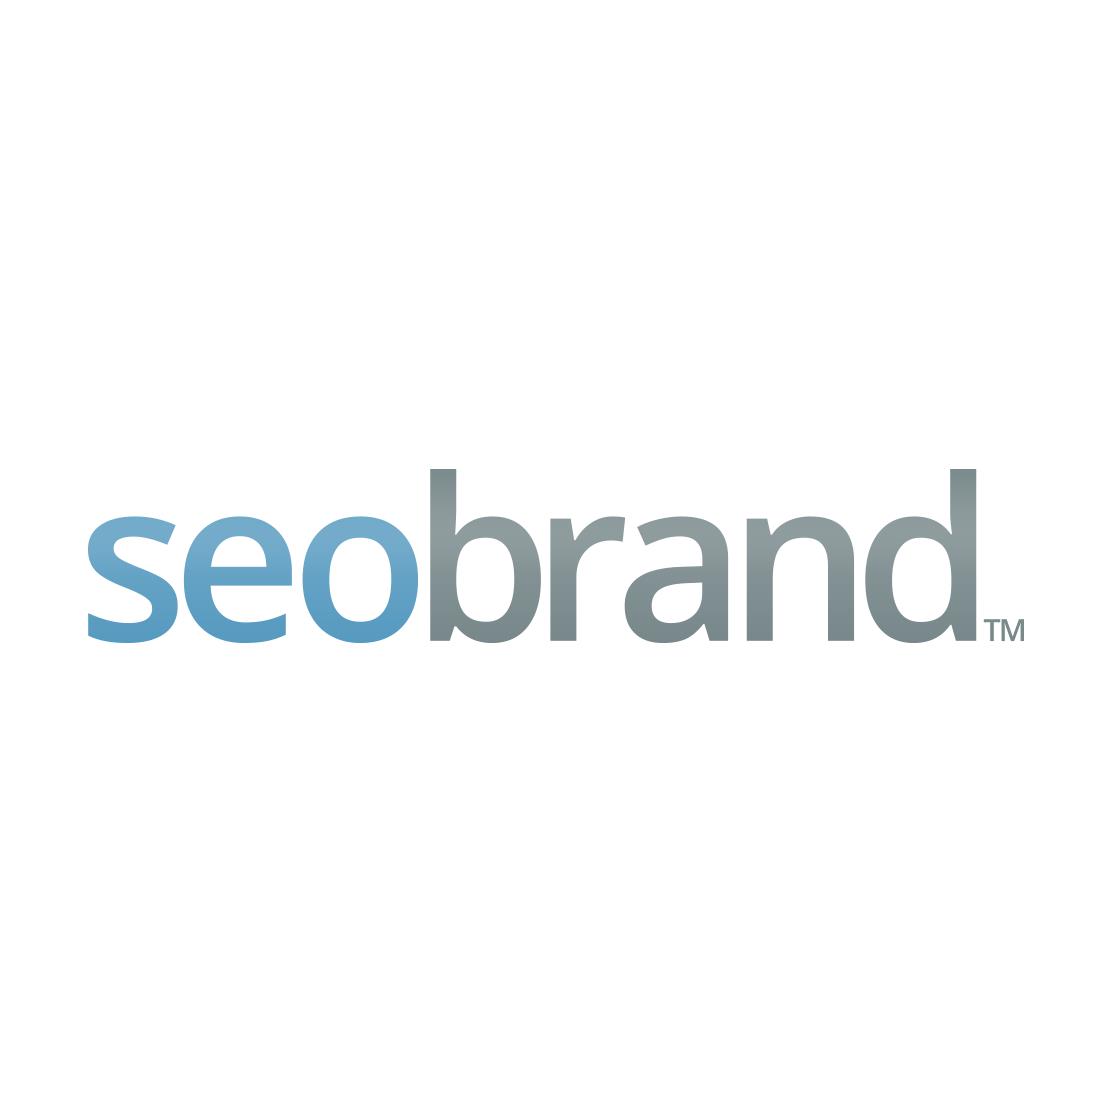 Best New York SEO Business Logo: SEO Brand